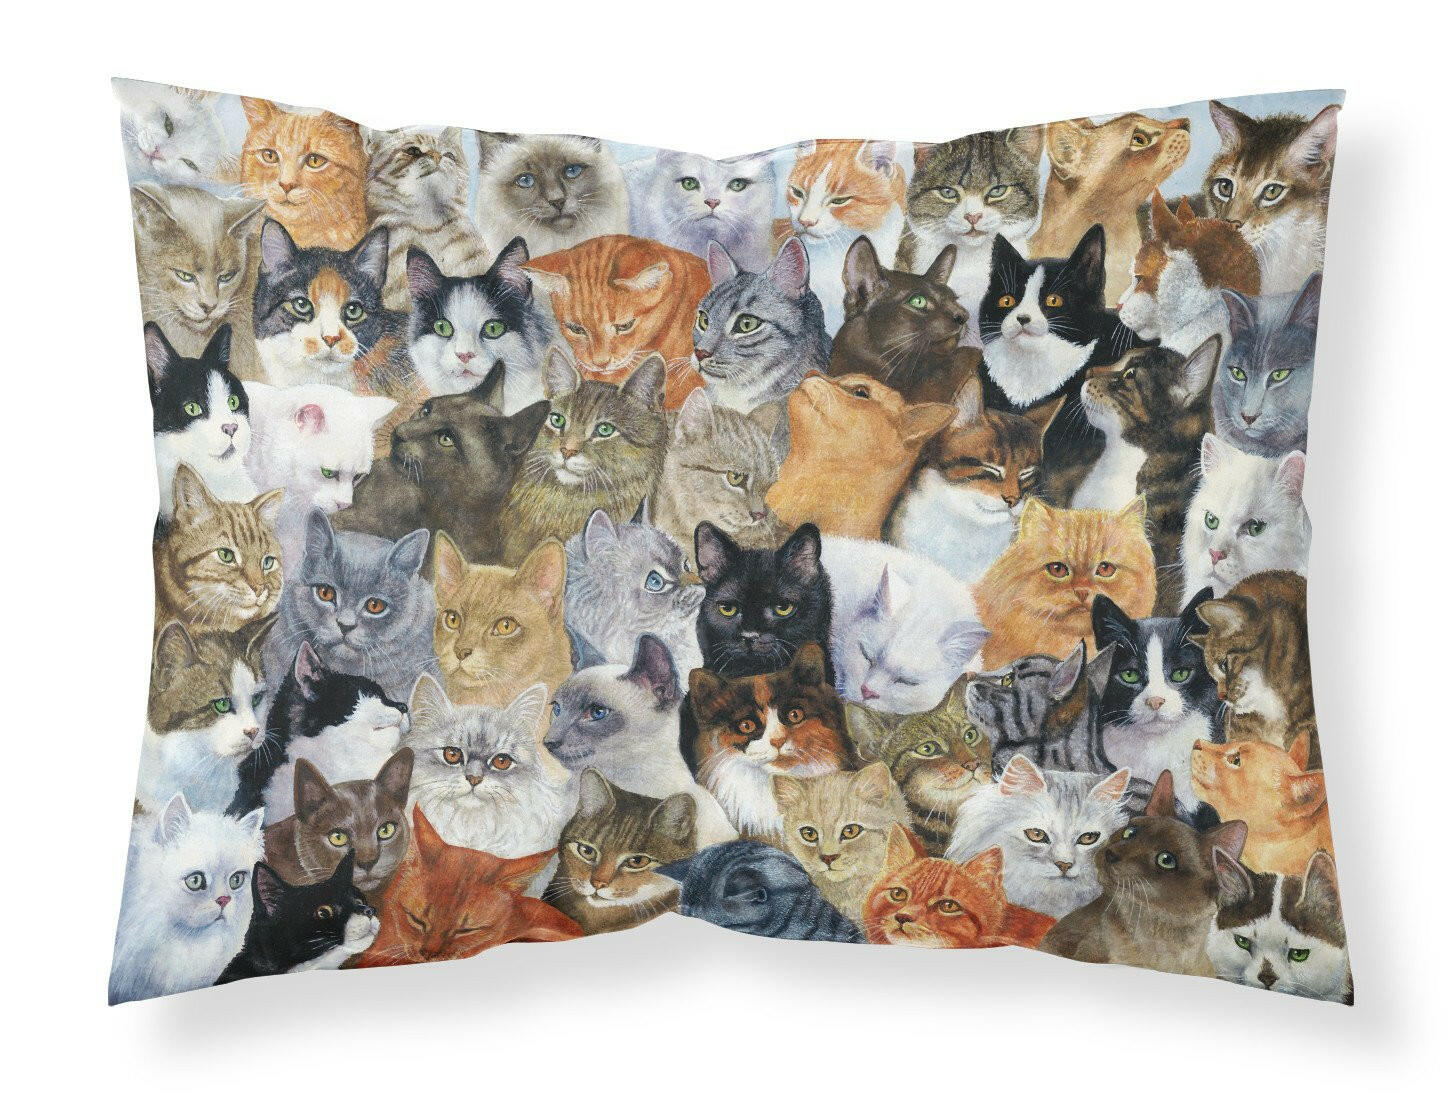 Cats Galore Fabric Standard Pillowcase BDBA0414PILLOWCASE by Caroline's Treasures